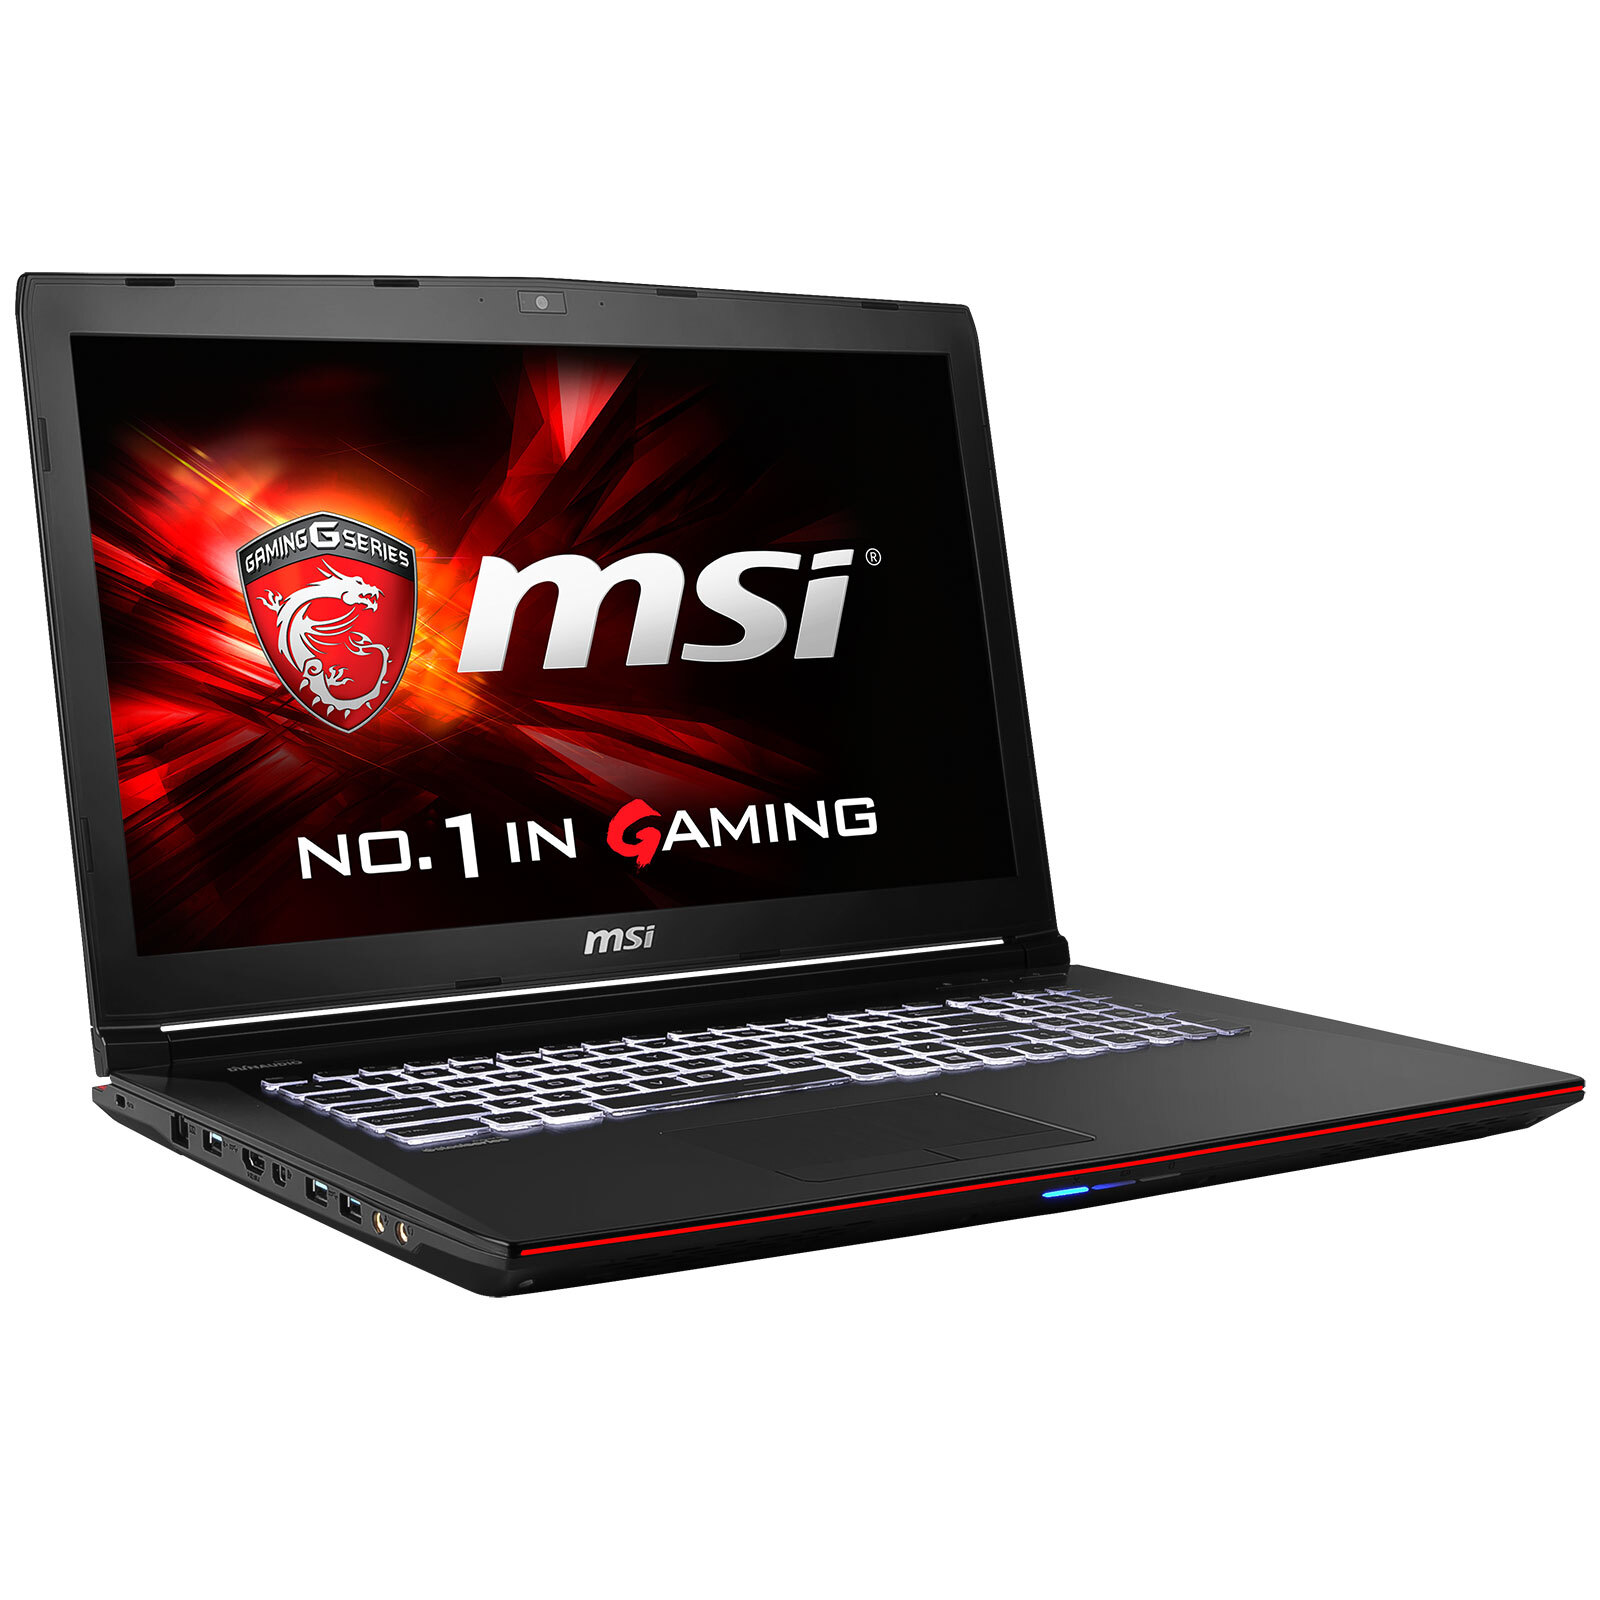 Laptop MSI GE72 2QC (416XVN) - Intel core i7, 8GB RAM, HDD 1TB, nVidia Geforce GTX960M 2GB GDDR5, 17.3 inch